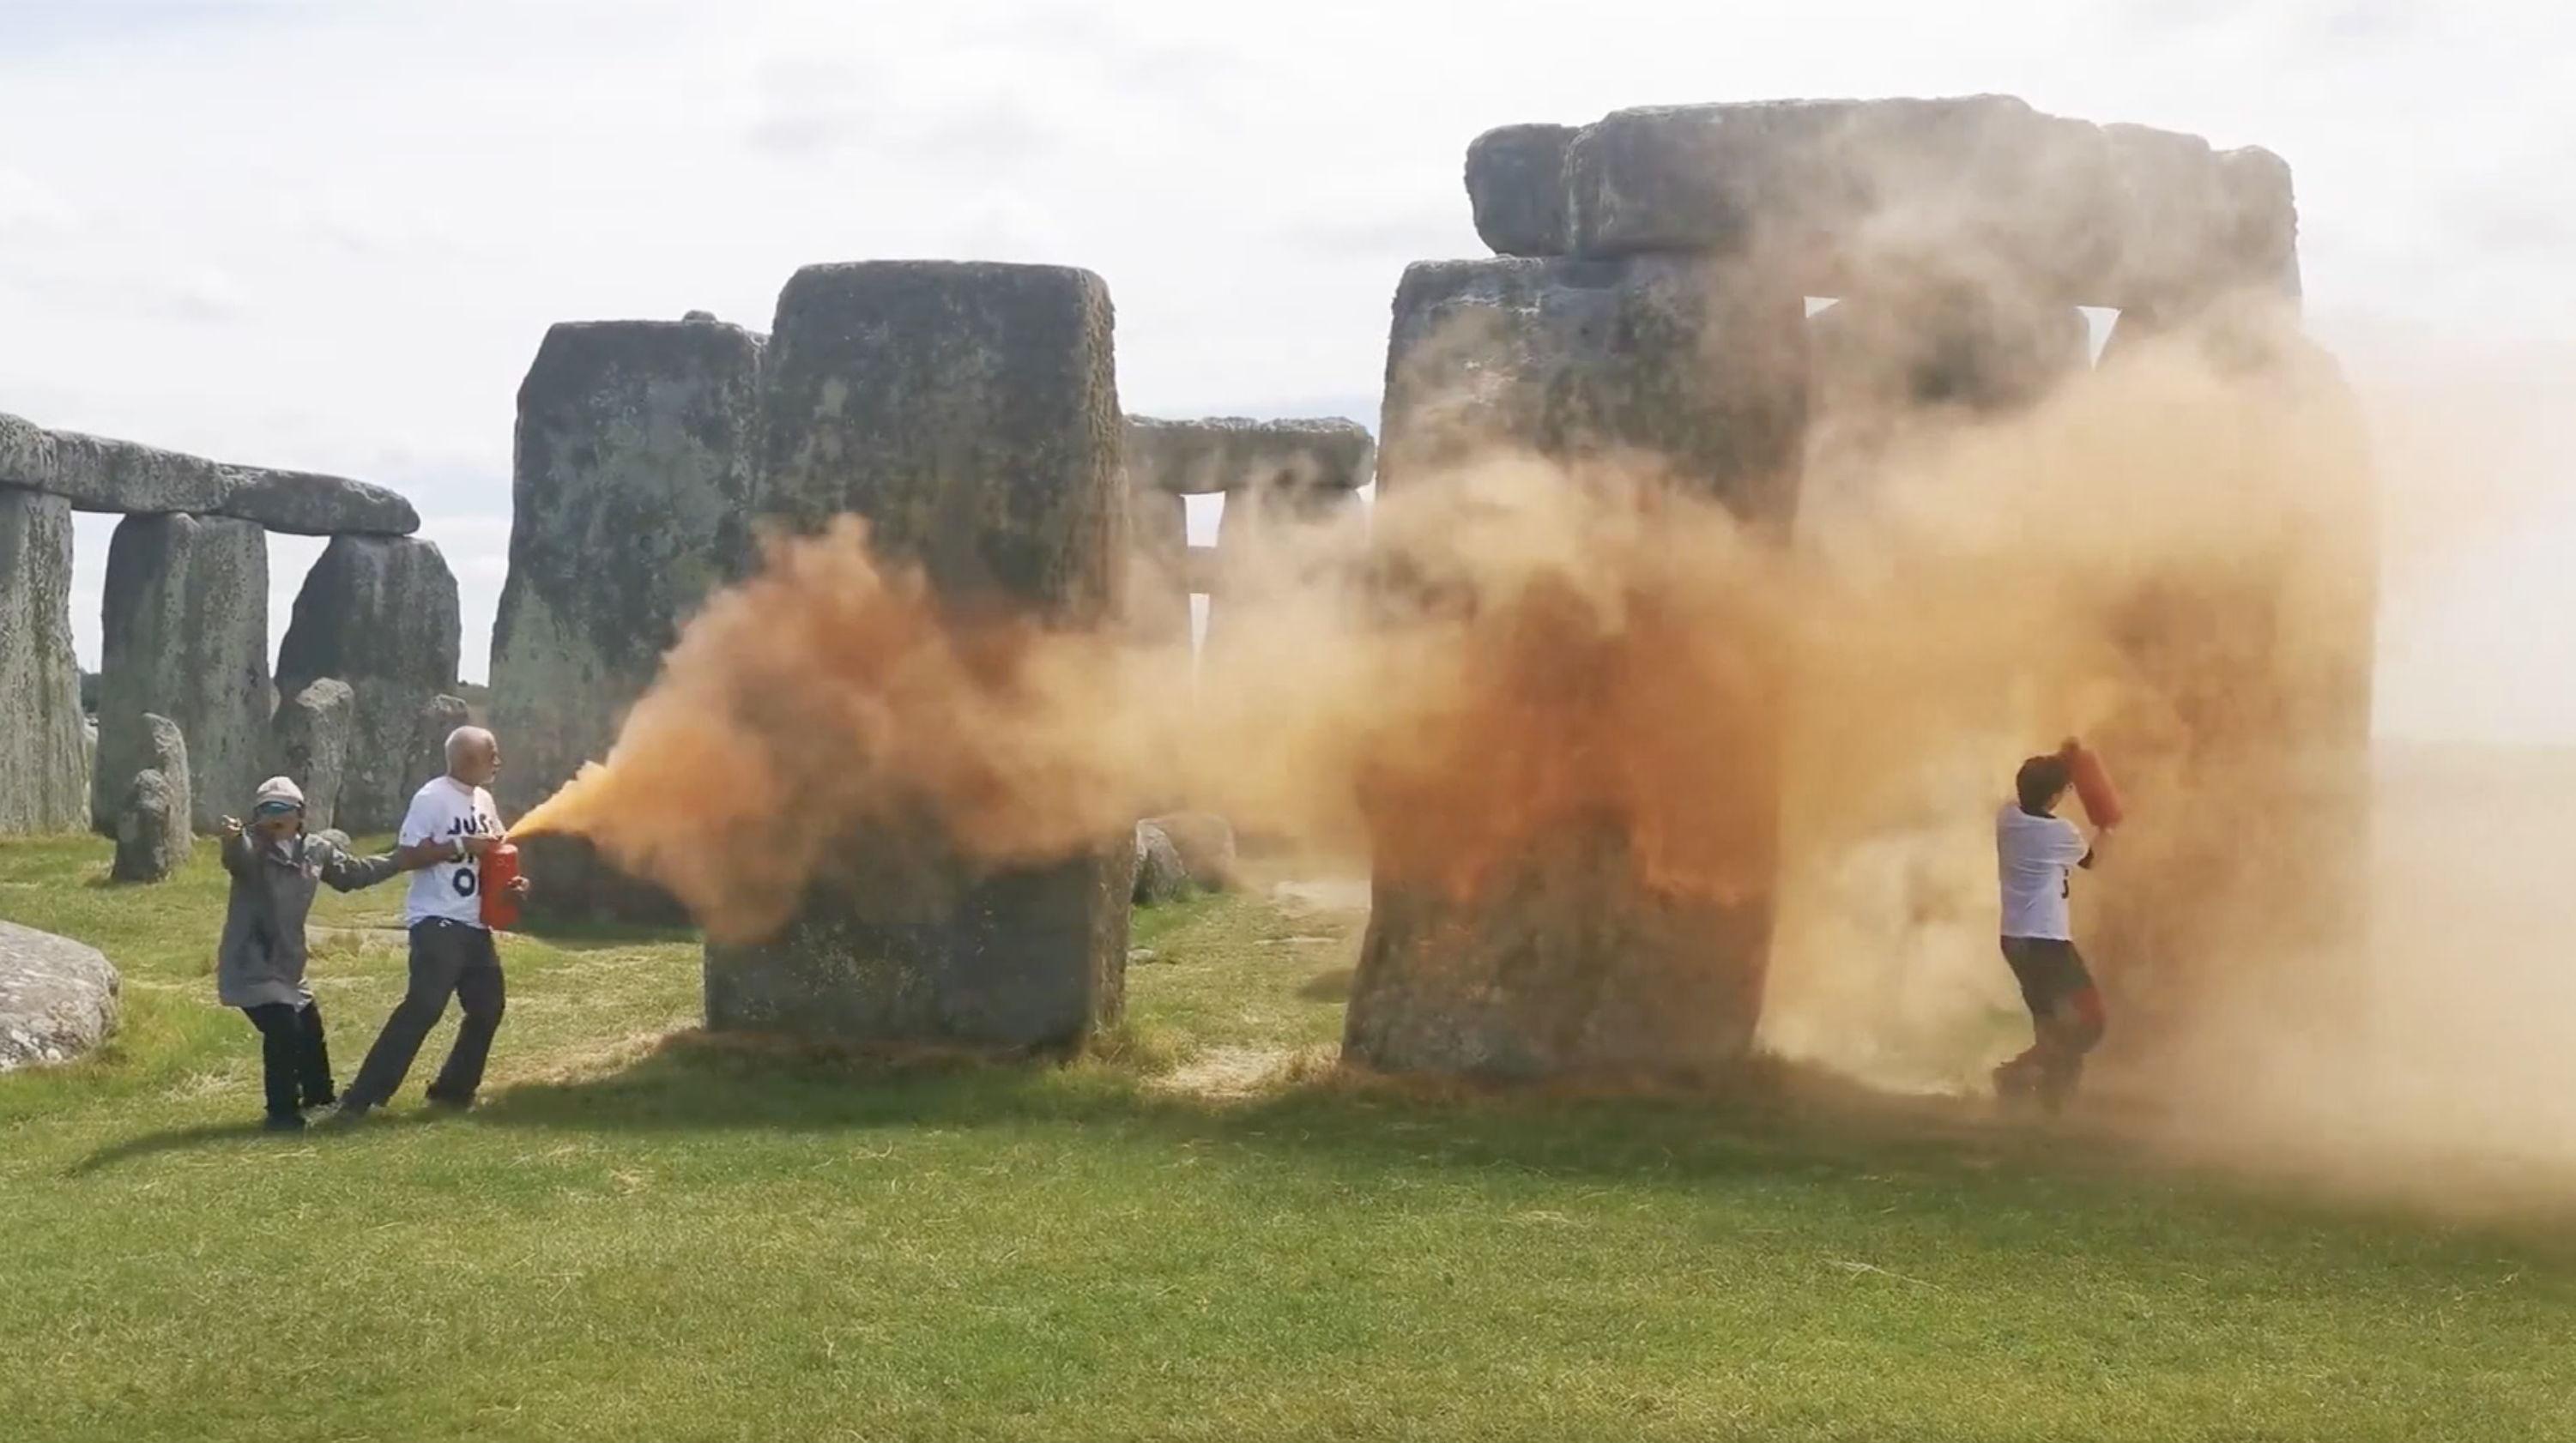 Climate activists spray England's ancient Stonehenge monument with orange paint